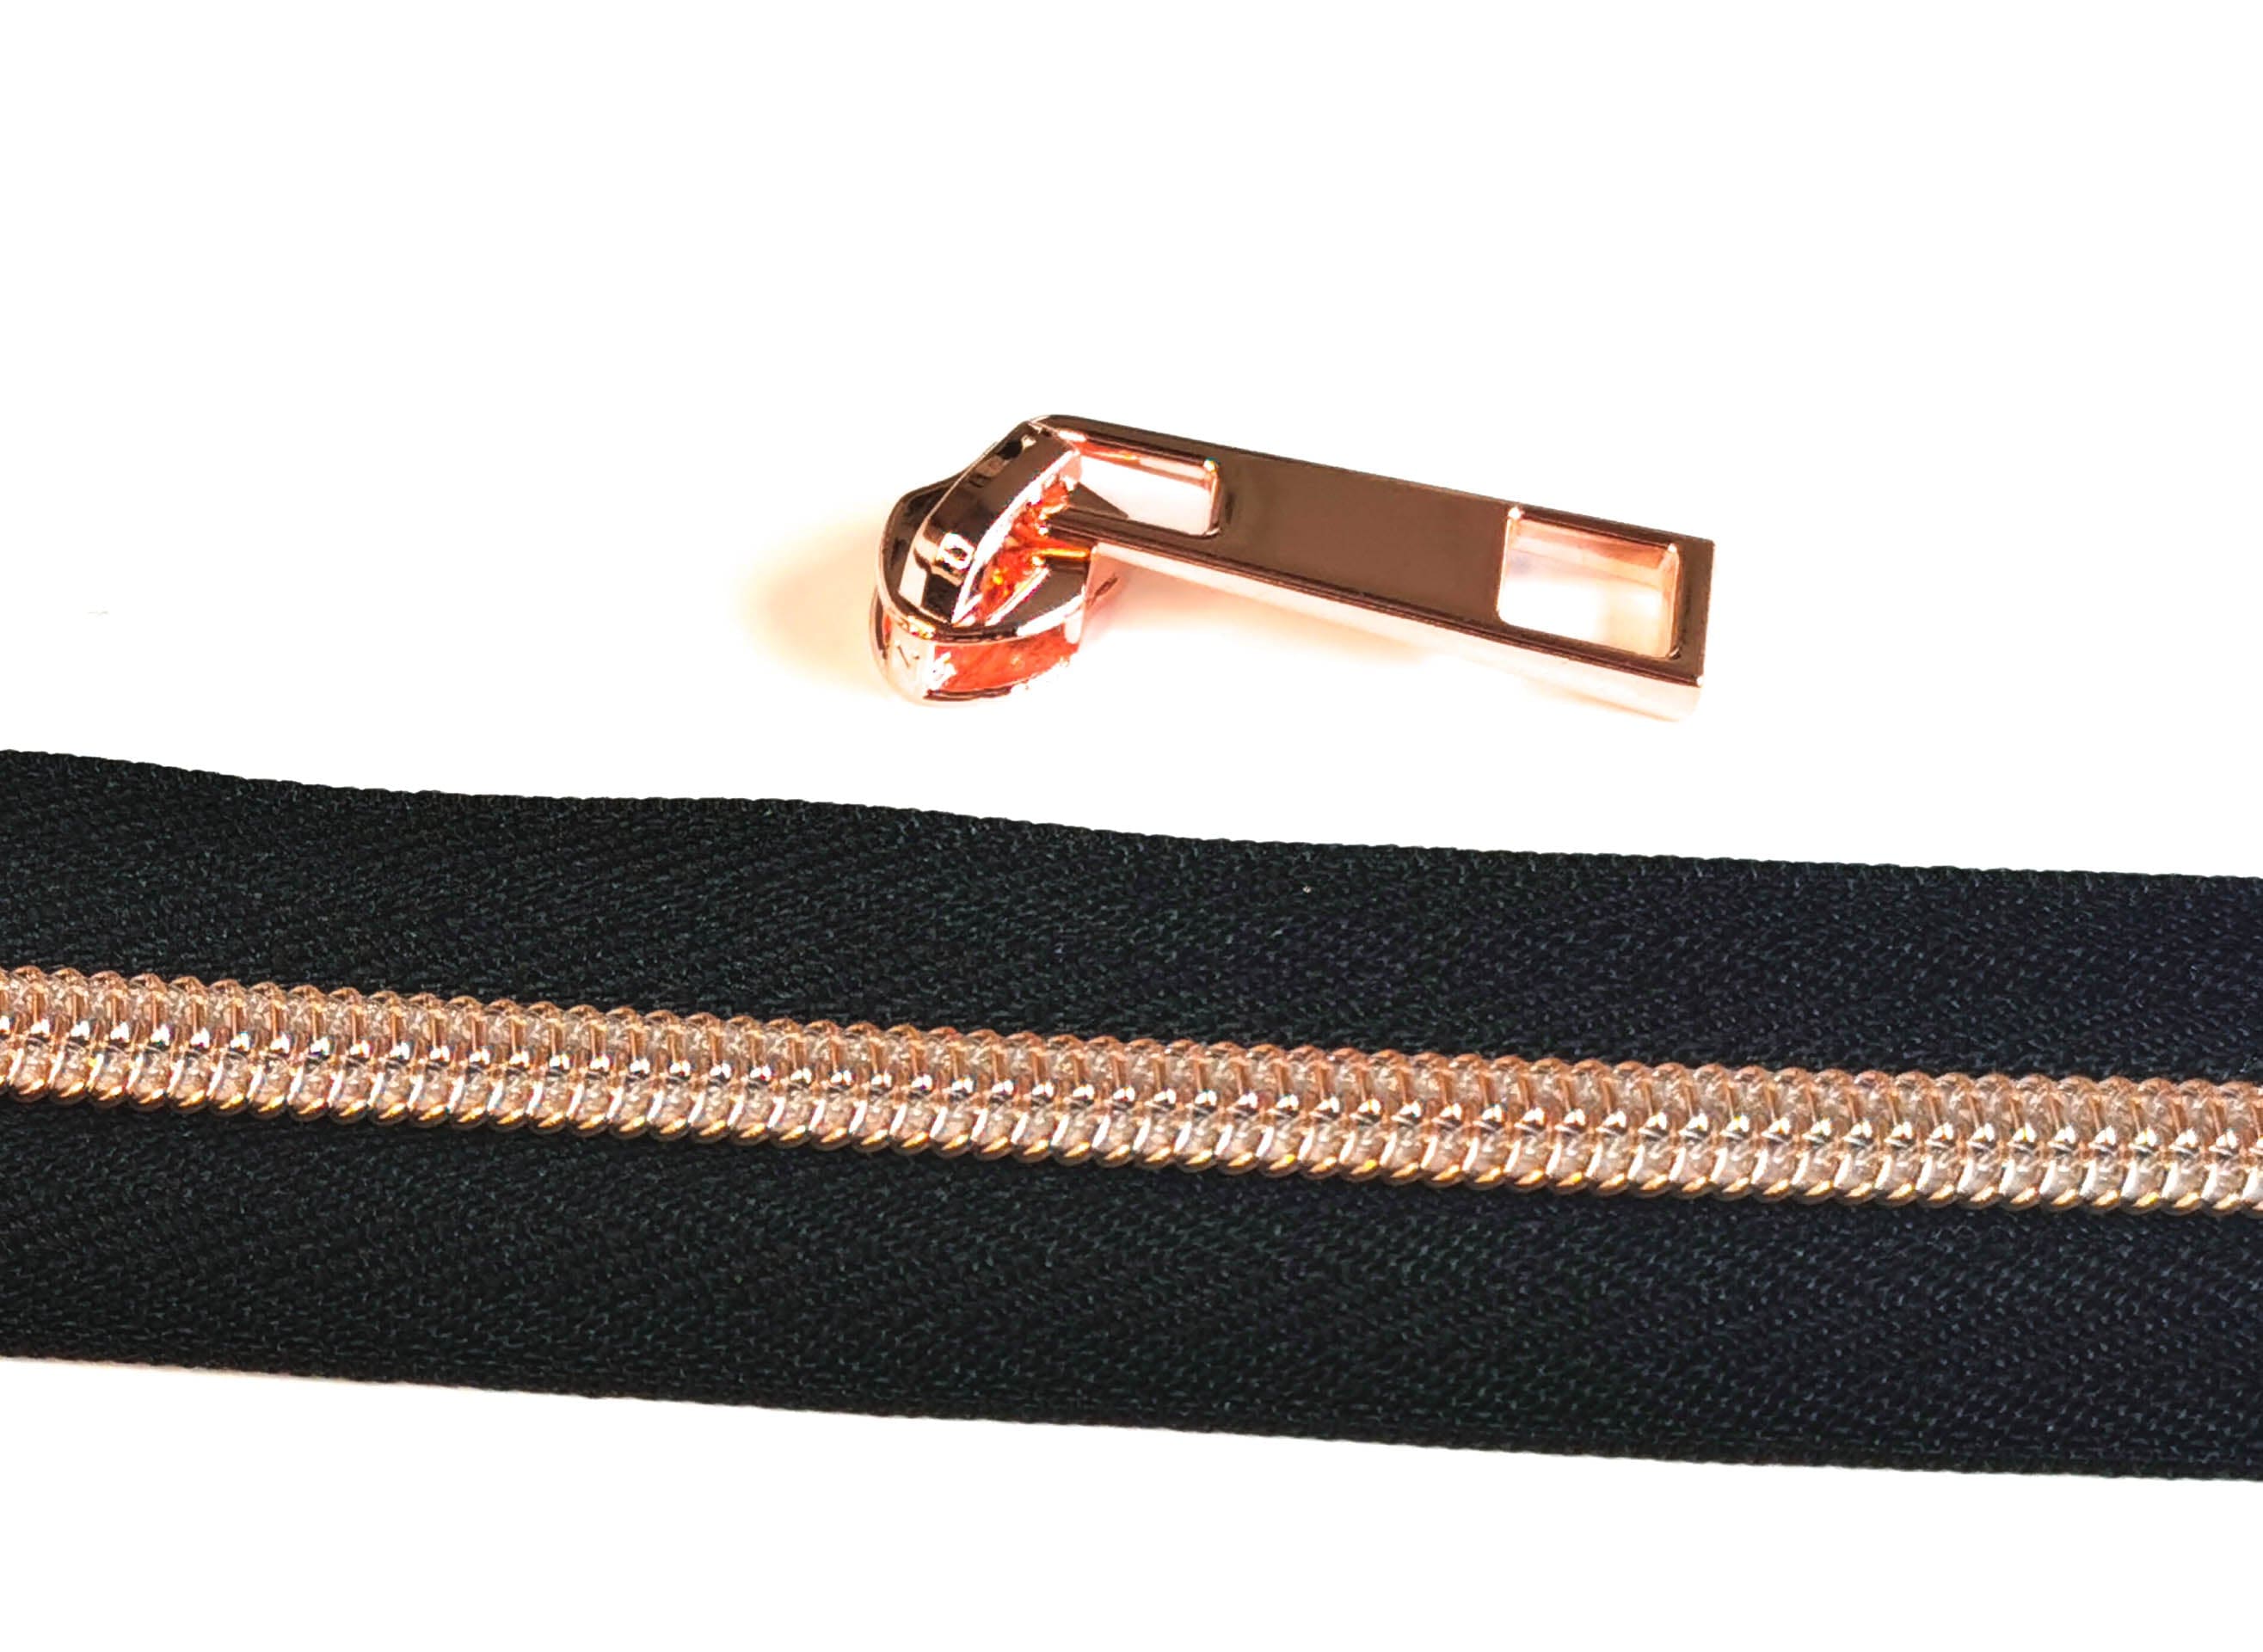 Kiwi Bagineers Zippers Black / Rose Gold Zipper Tape. 30" 76cm of #5 Zipper tape with 2 Zipper Sliders/Pullers By Kiwi Bagineers